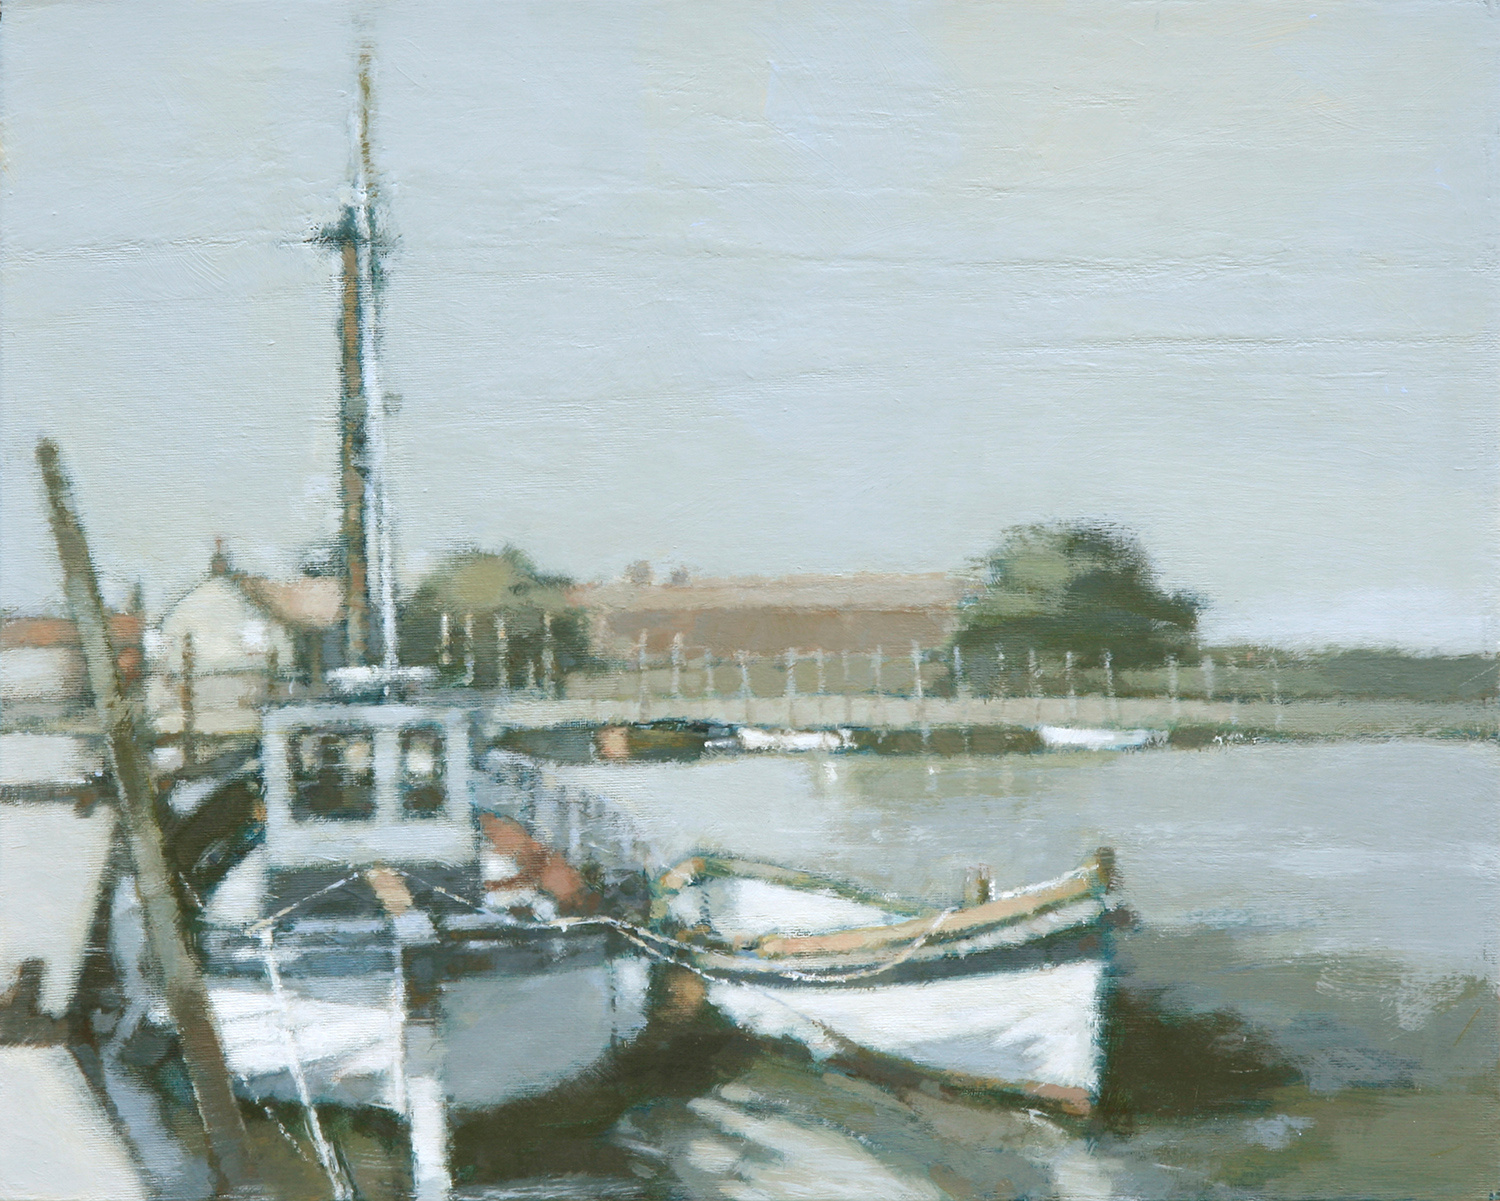 Blakeney Harbour by John Newland